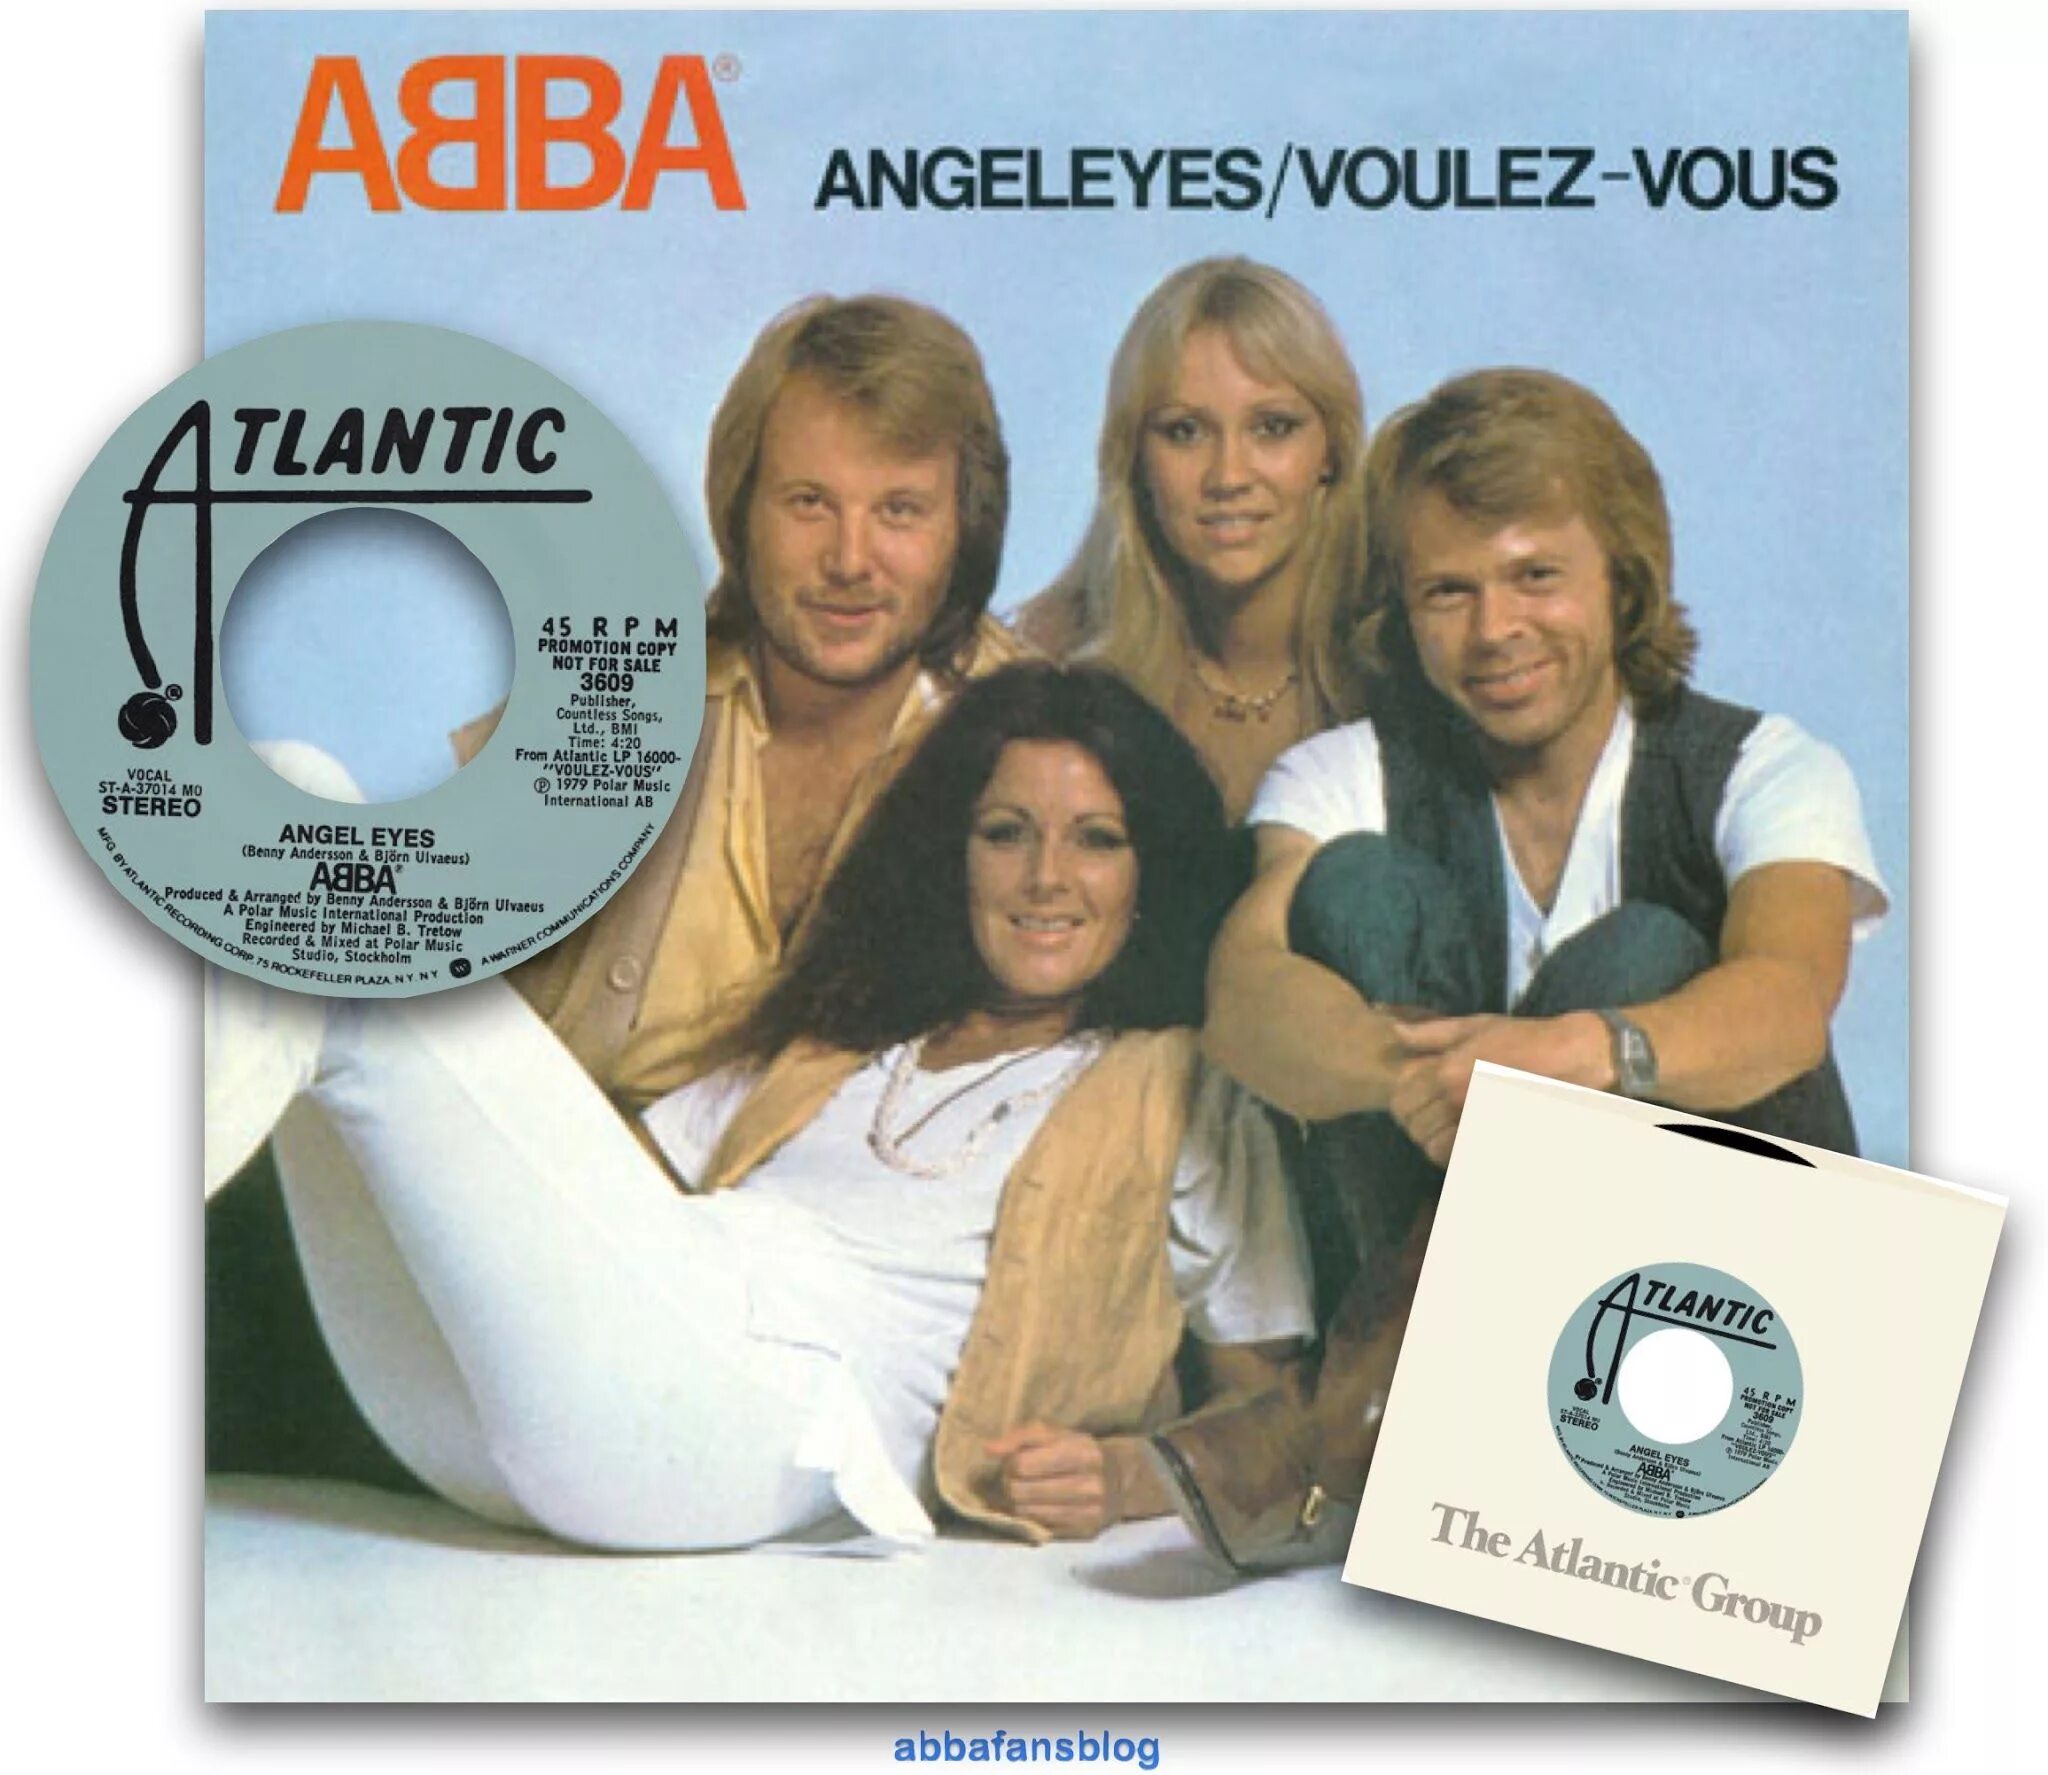 Angel eyes песня. Абба 1978. ABBA 1979 America. Альбом абба 1979. ABBA Angel Eyes обложка.